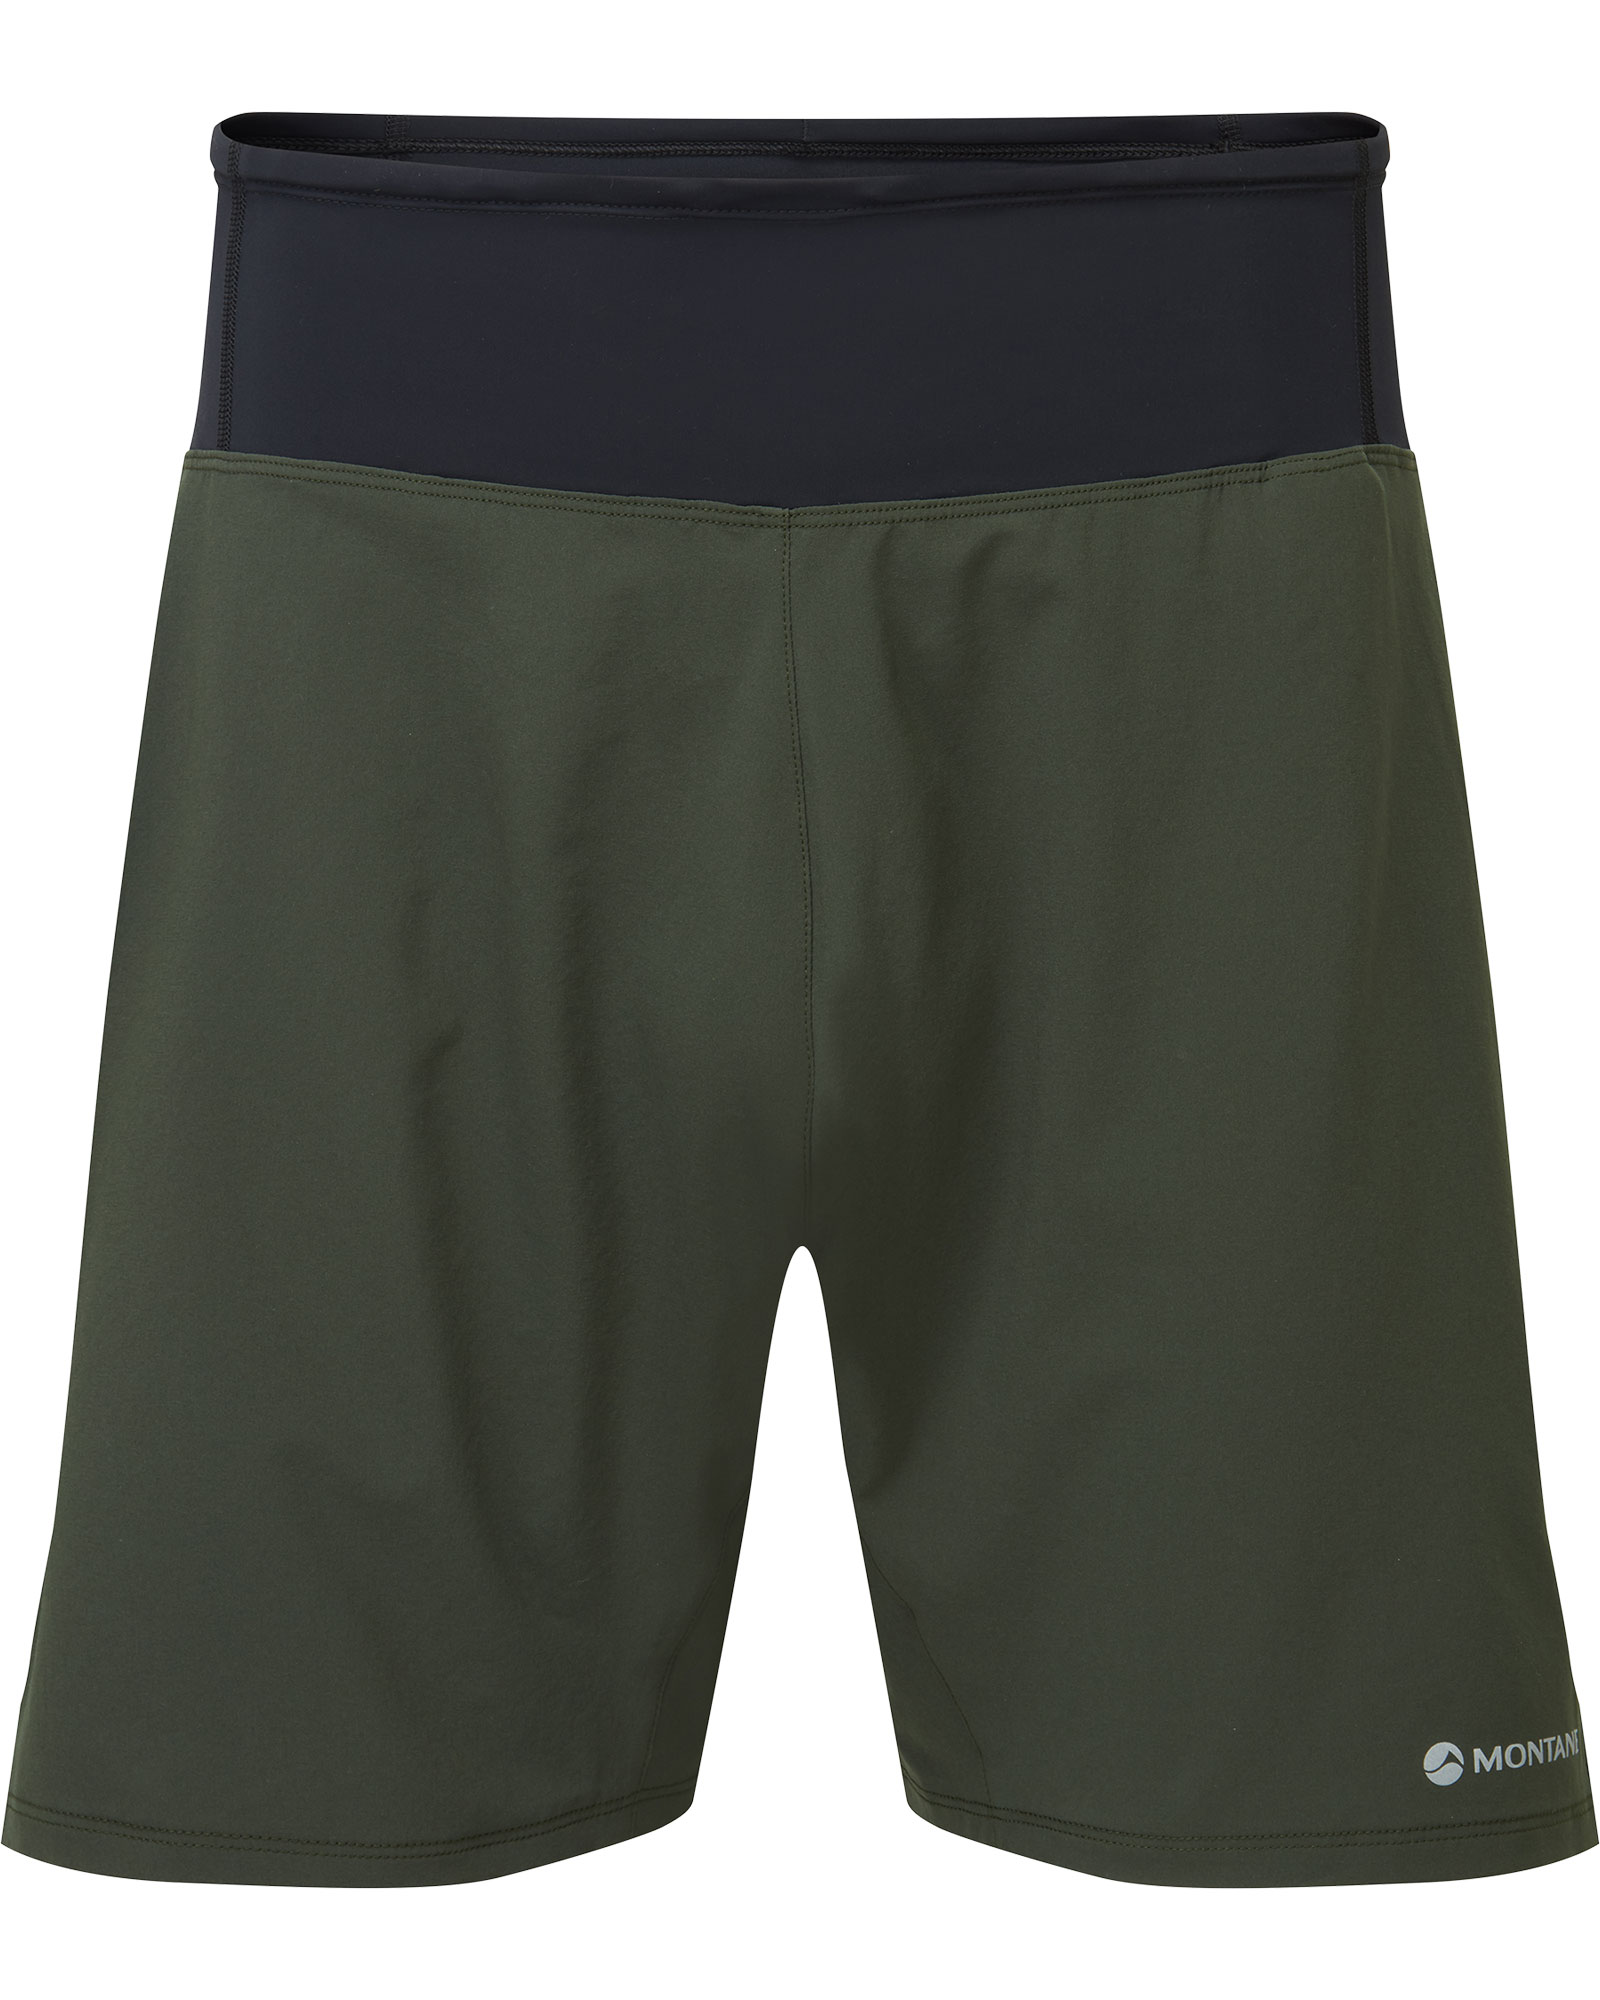 Montane Slipstream Men’s 7" Shorts - Oak Green M